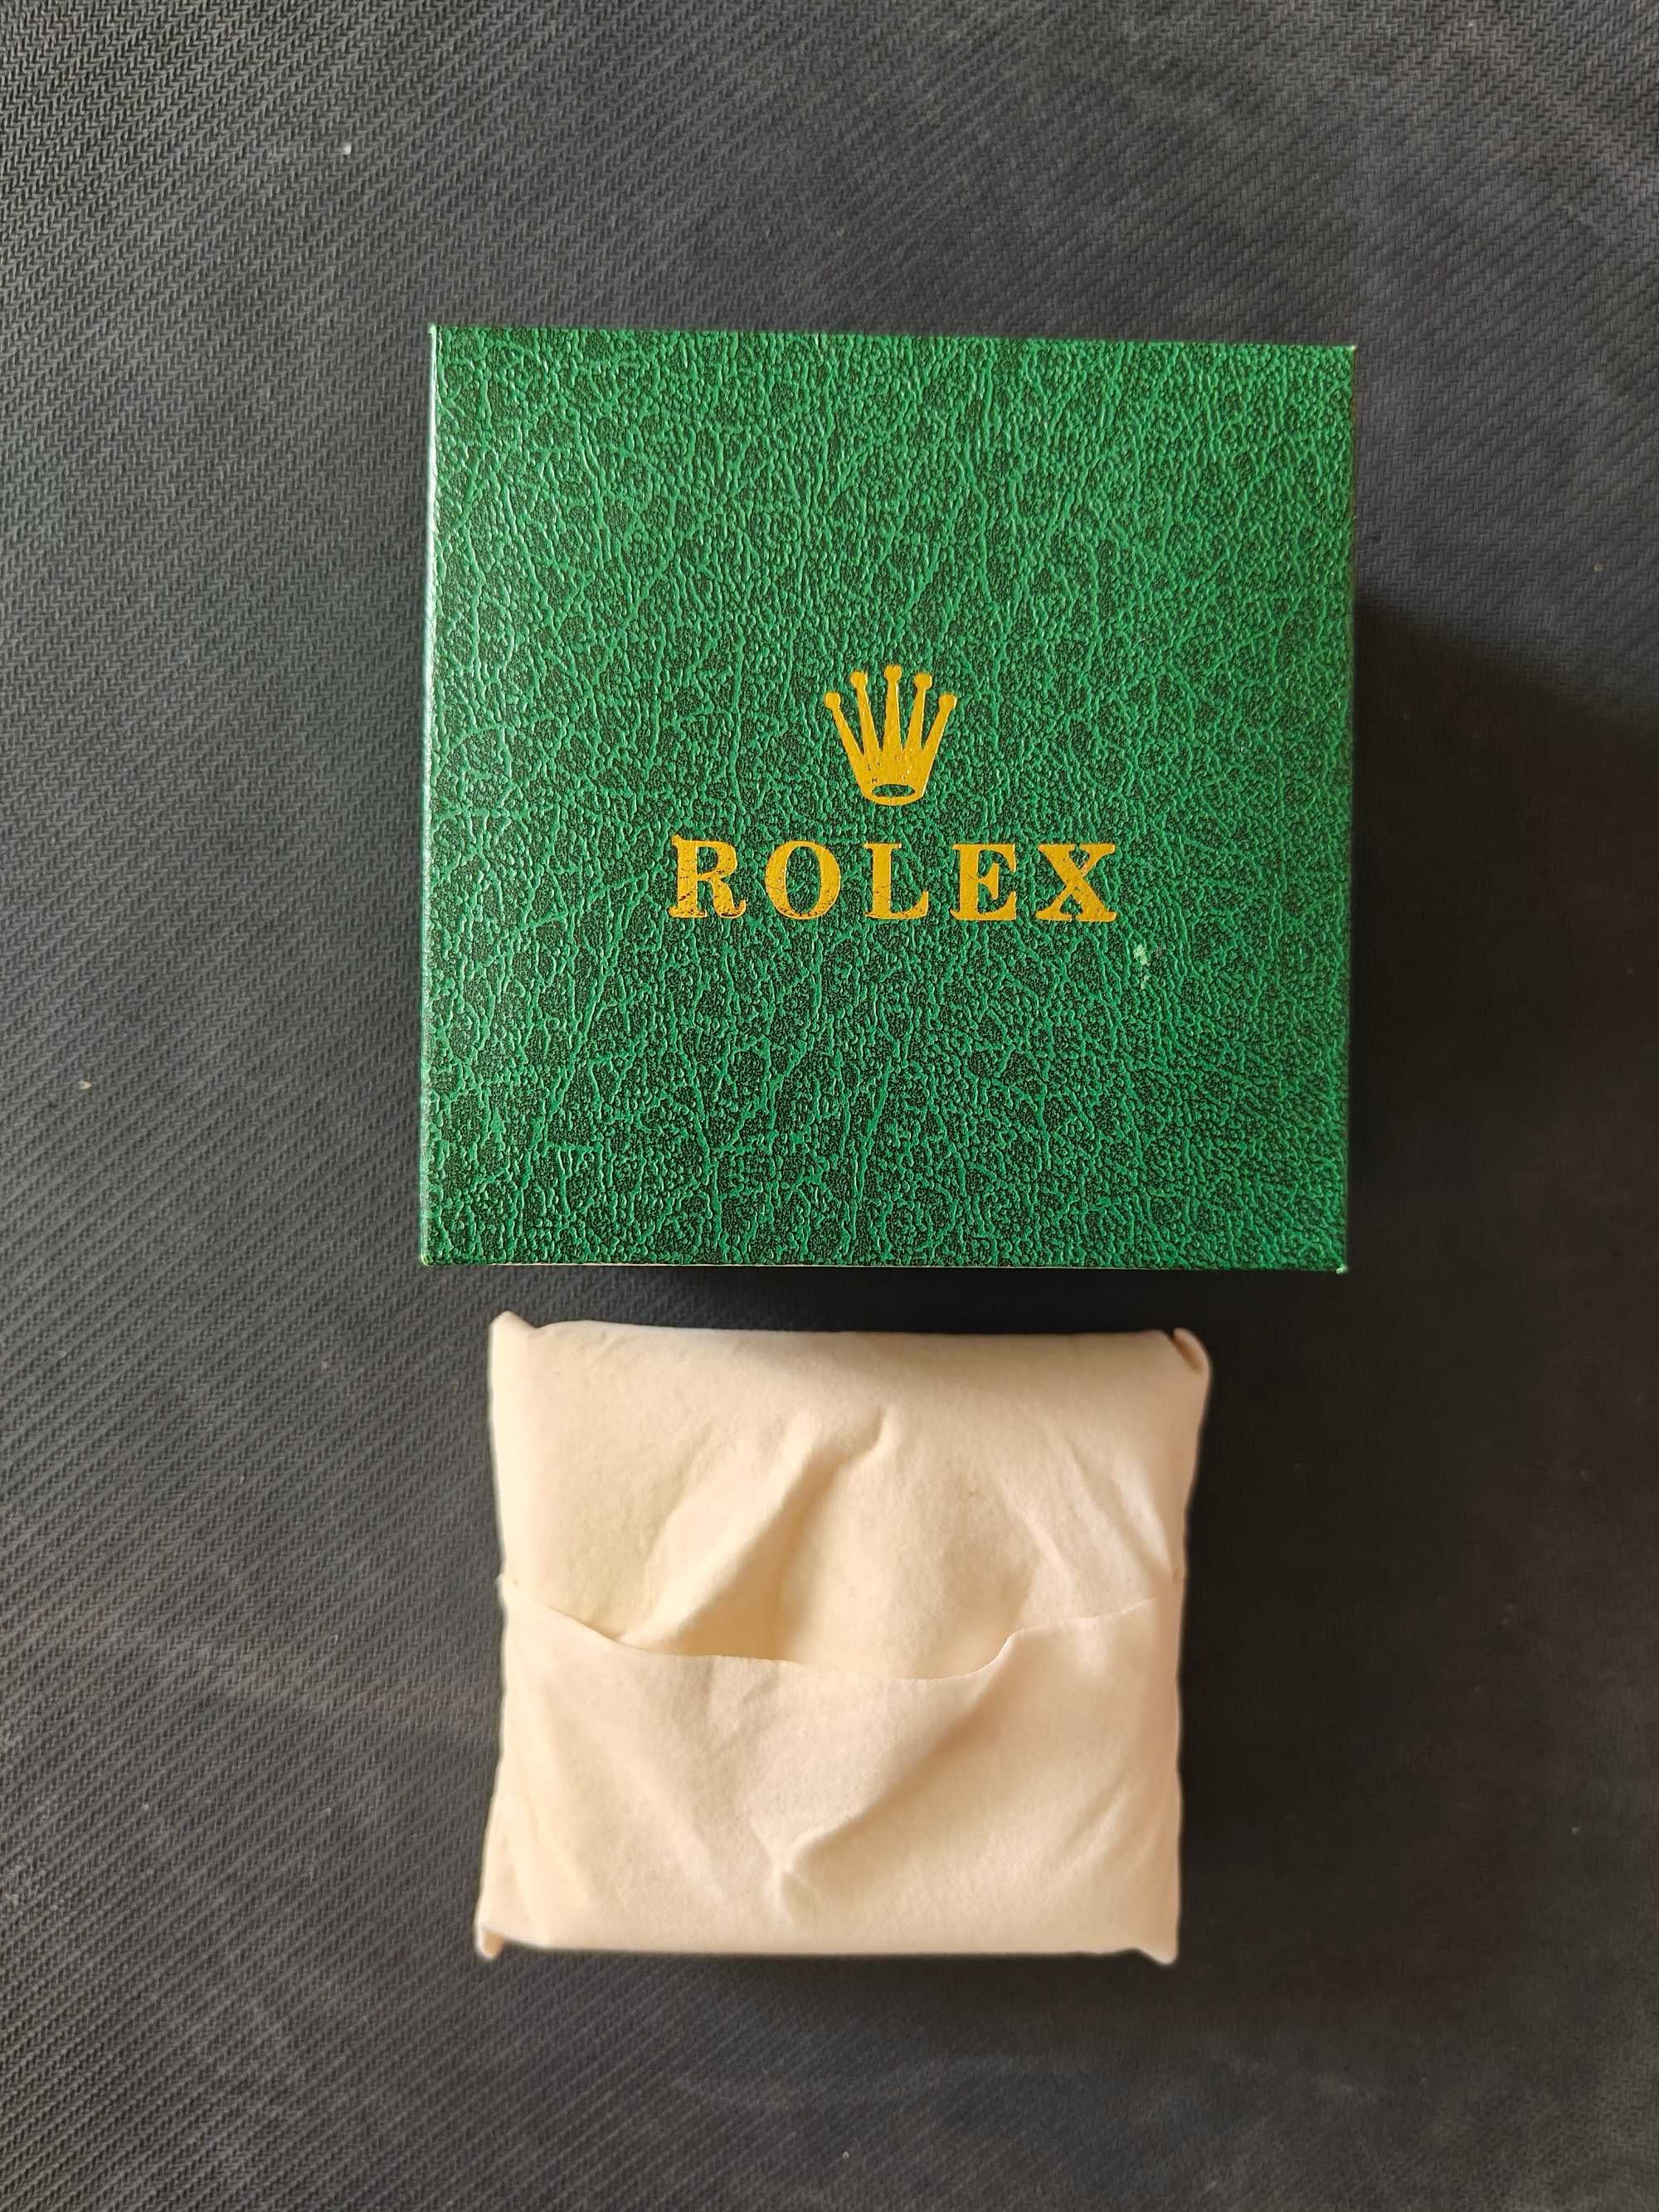 Pudełko / pojemnik na zegarek Rollex